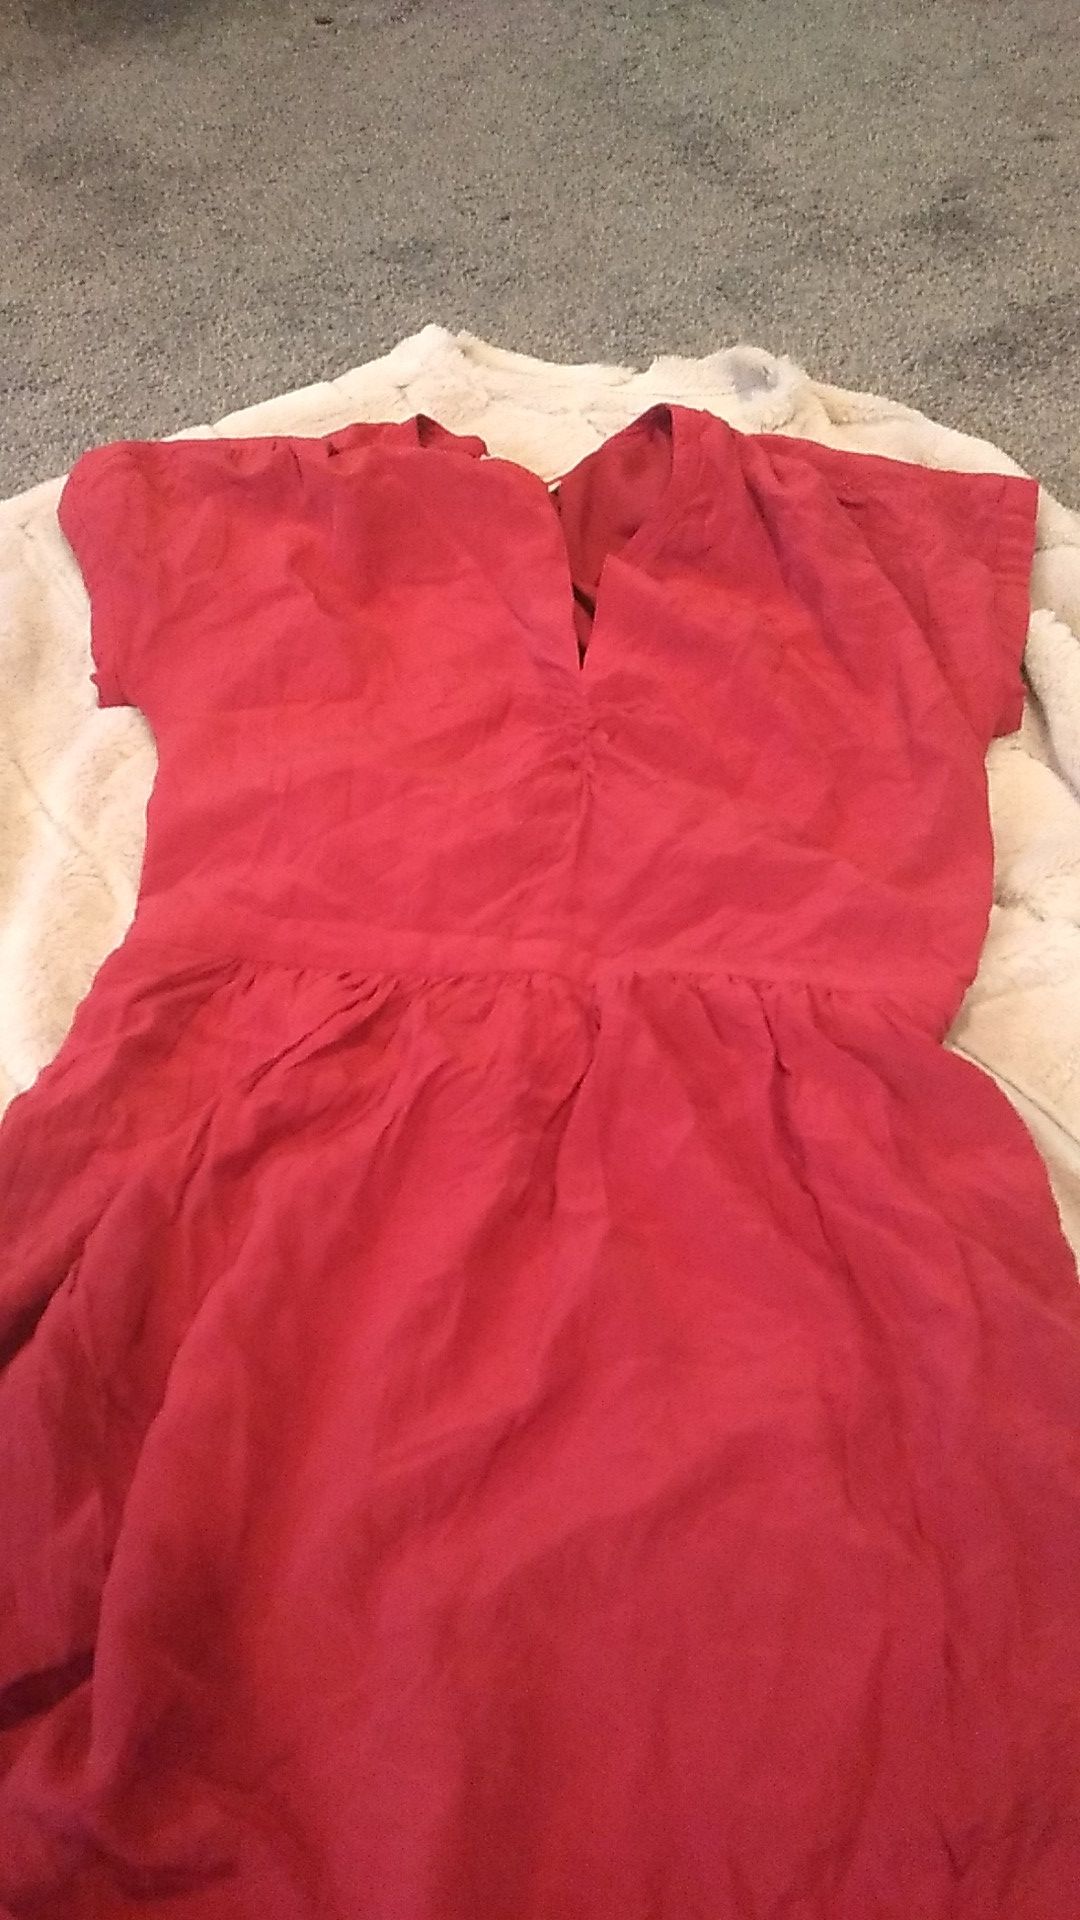 Madewell red dress